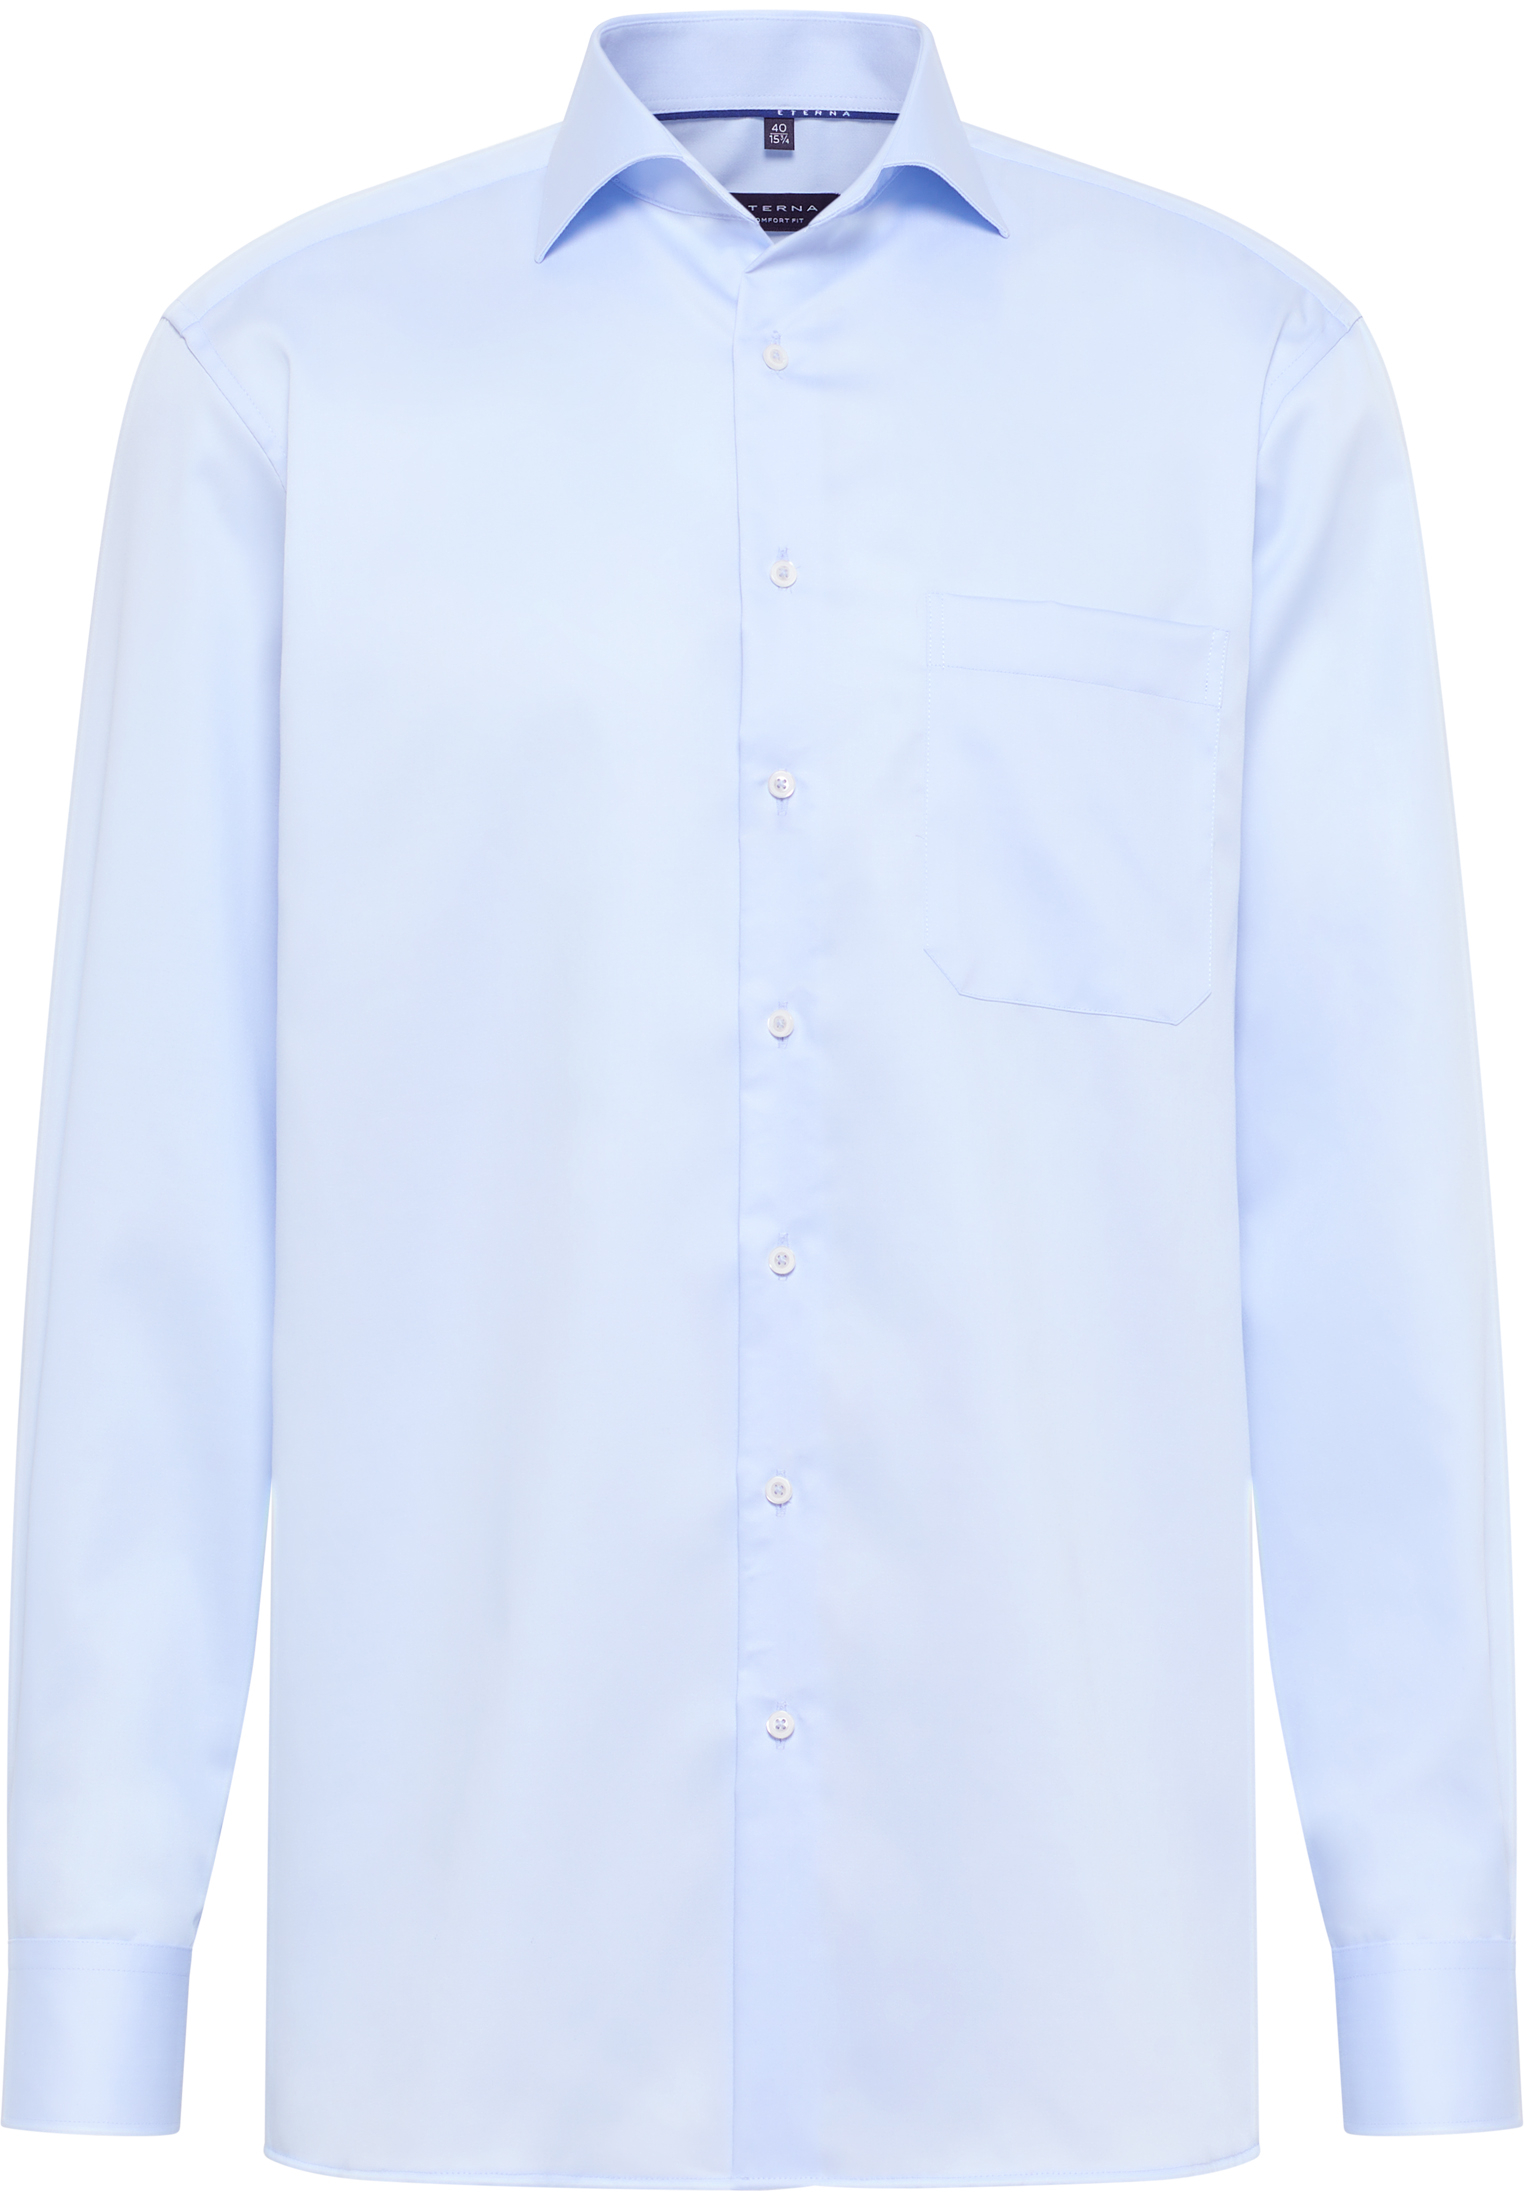 ETERNA plain cotton shirt COMFORT FIT